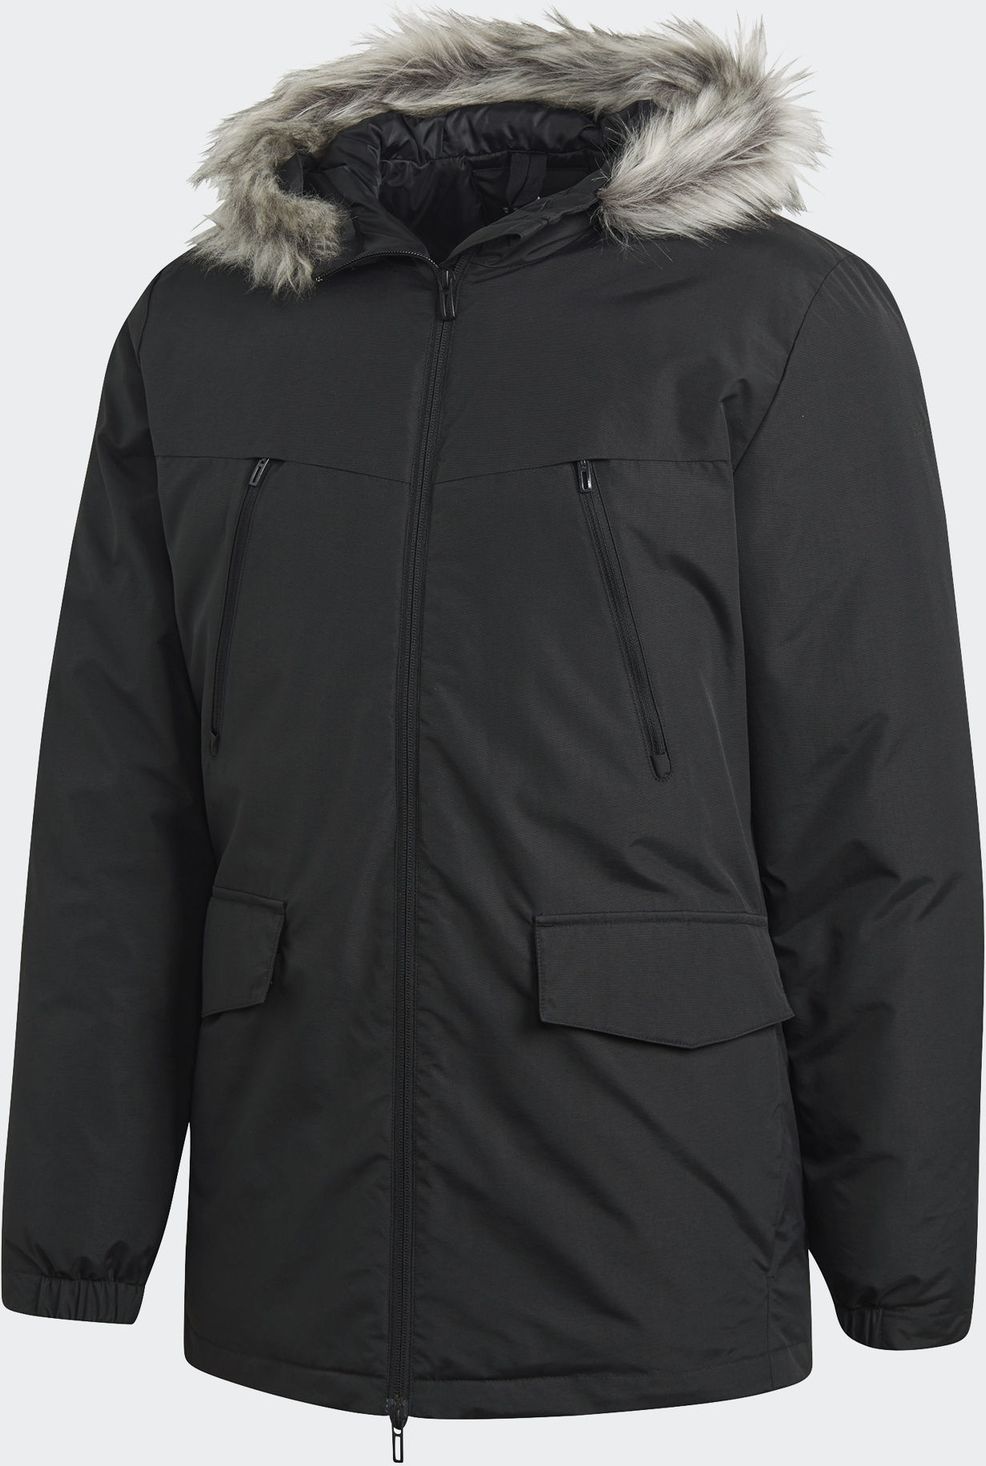   Adidas SDP Jacket Fur, : . CF0879.  S (44/46)